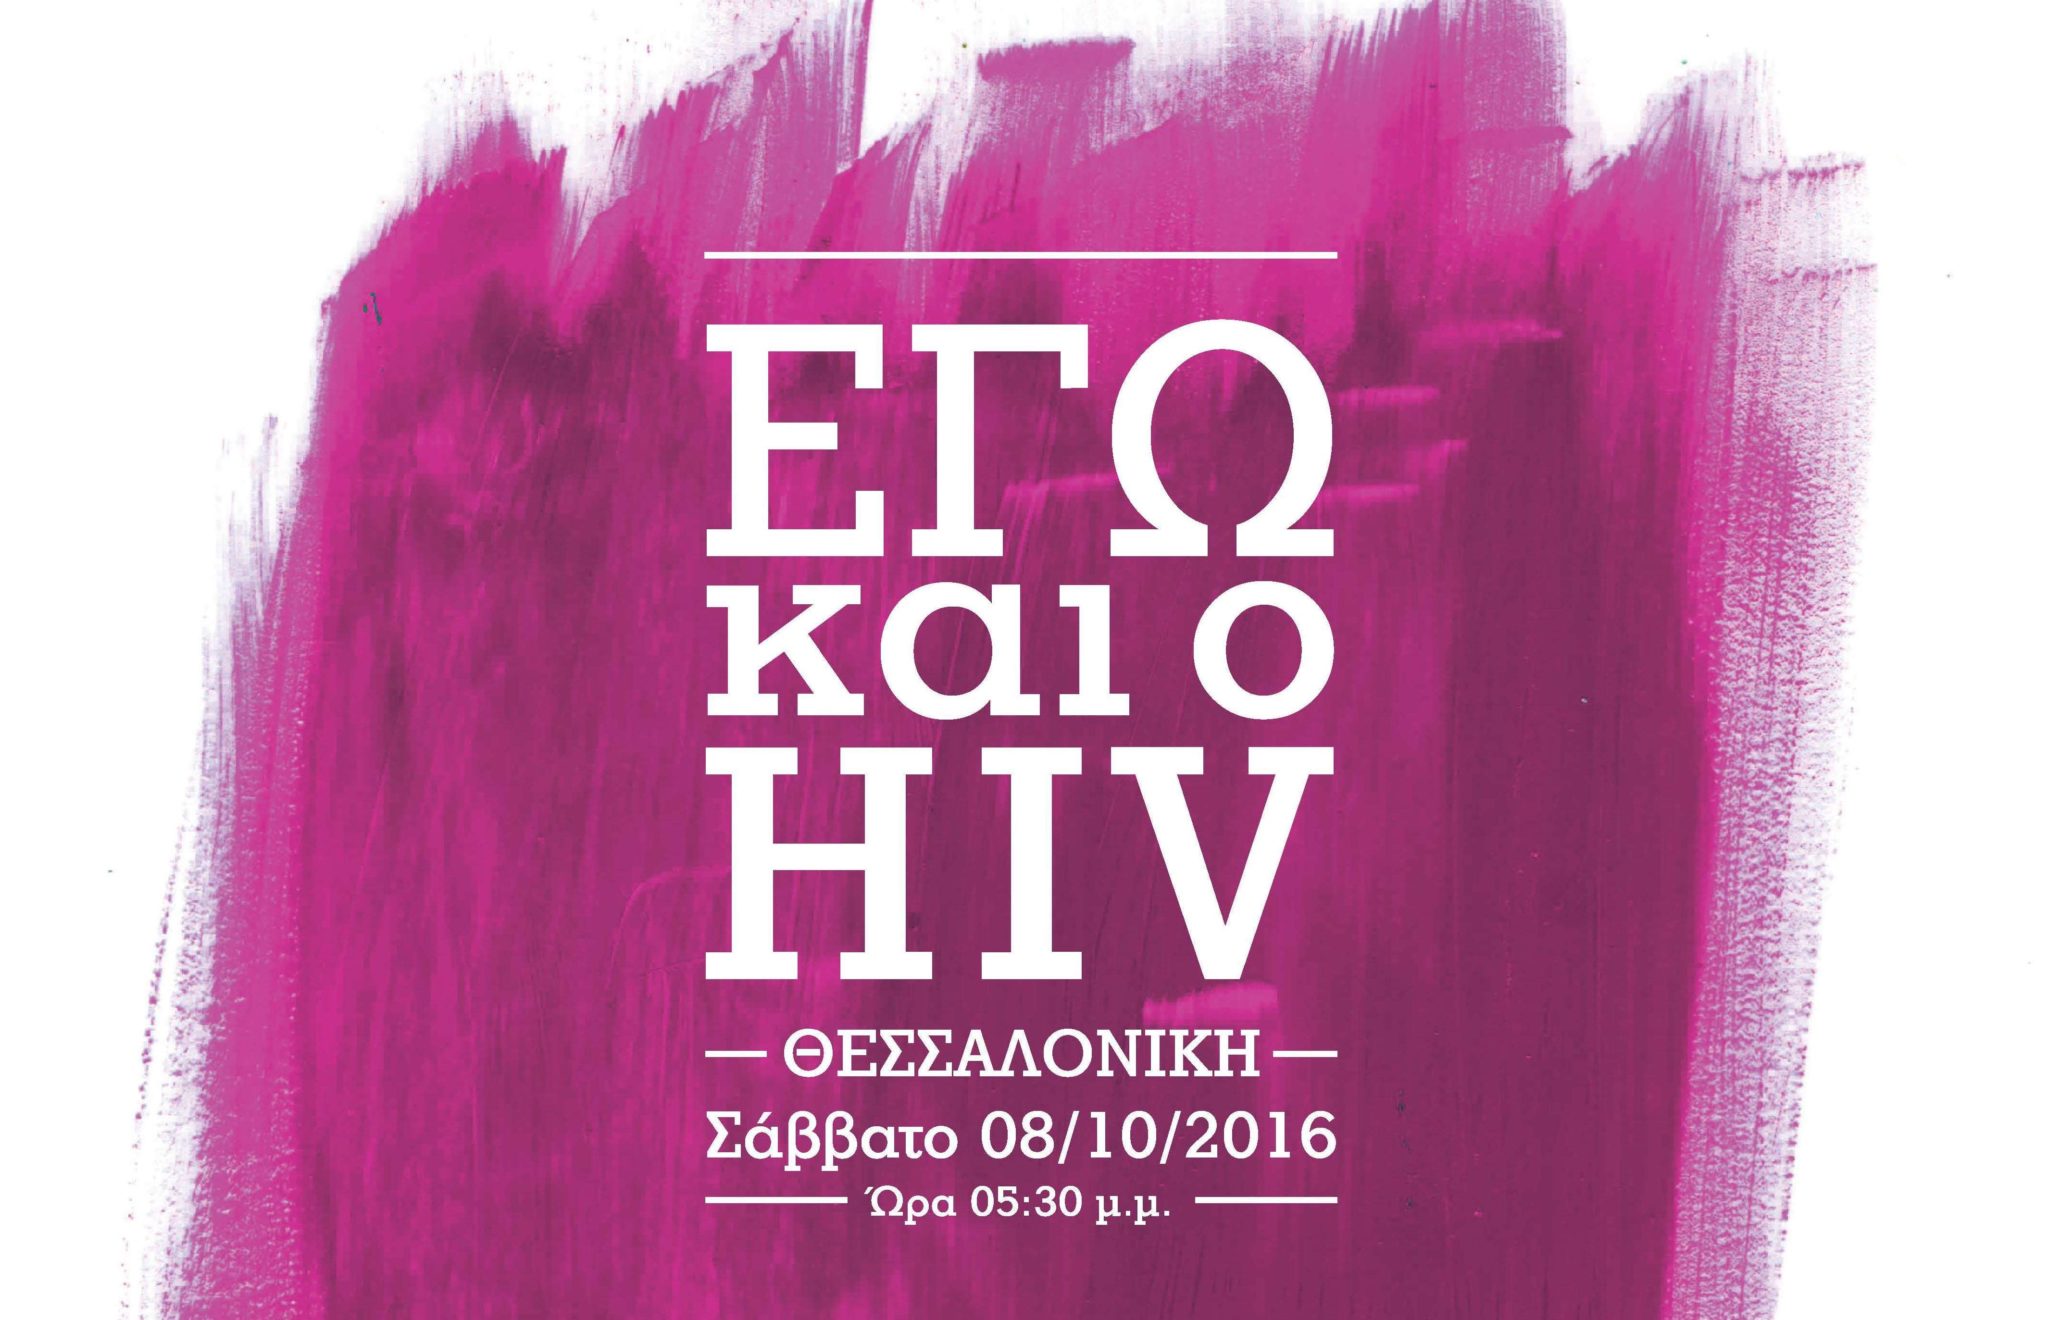 Featured image for ““ΕΓΩ ΚΑΙ Ο HIV” ΣΤΗ ΘΕΣΣΑΛΟΝΙΚΗ”